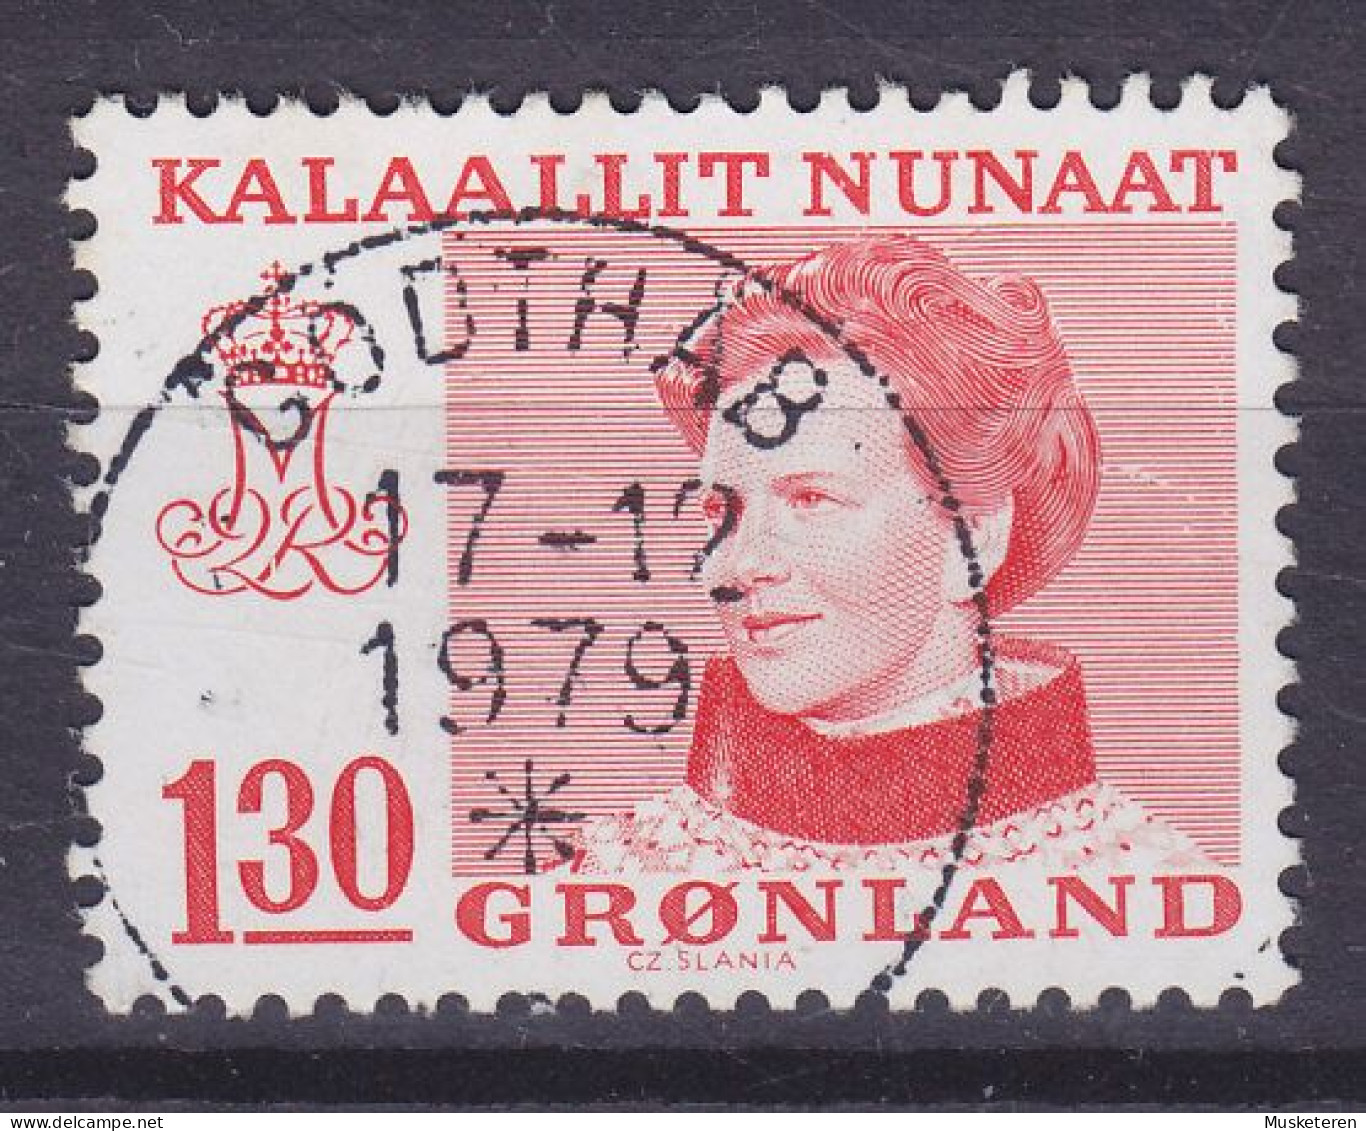 Greenland 1979 Mi. 113, 1.30 (Kr) Queen Margrethe II. (Cz. Slania) Deluxe GODTHÅB Cancel !! - Used Stamps